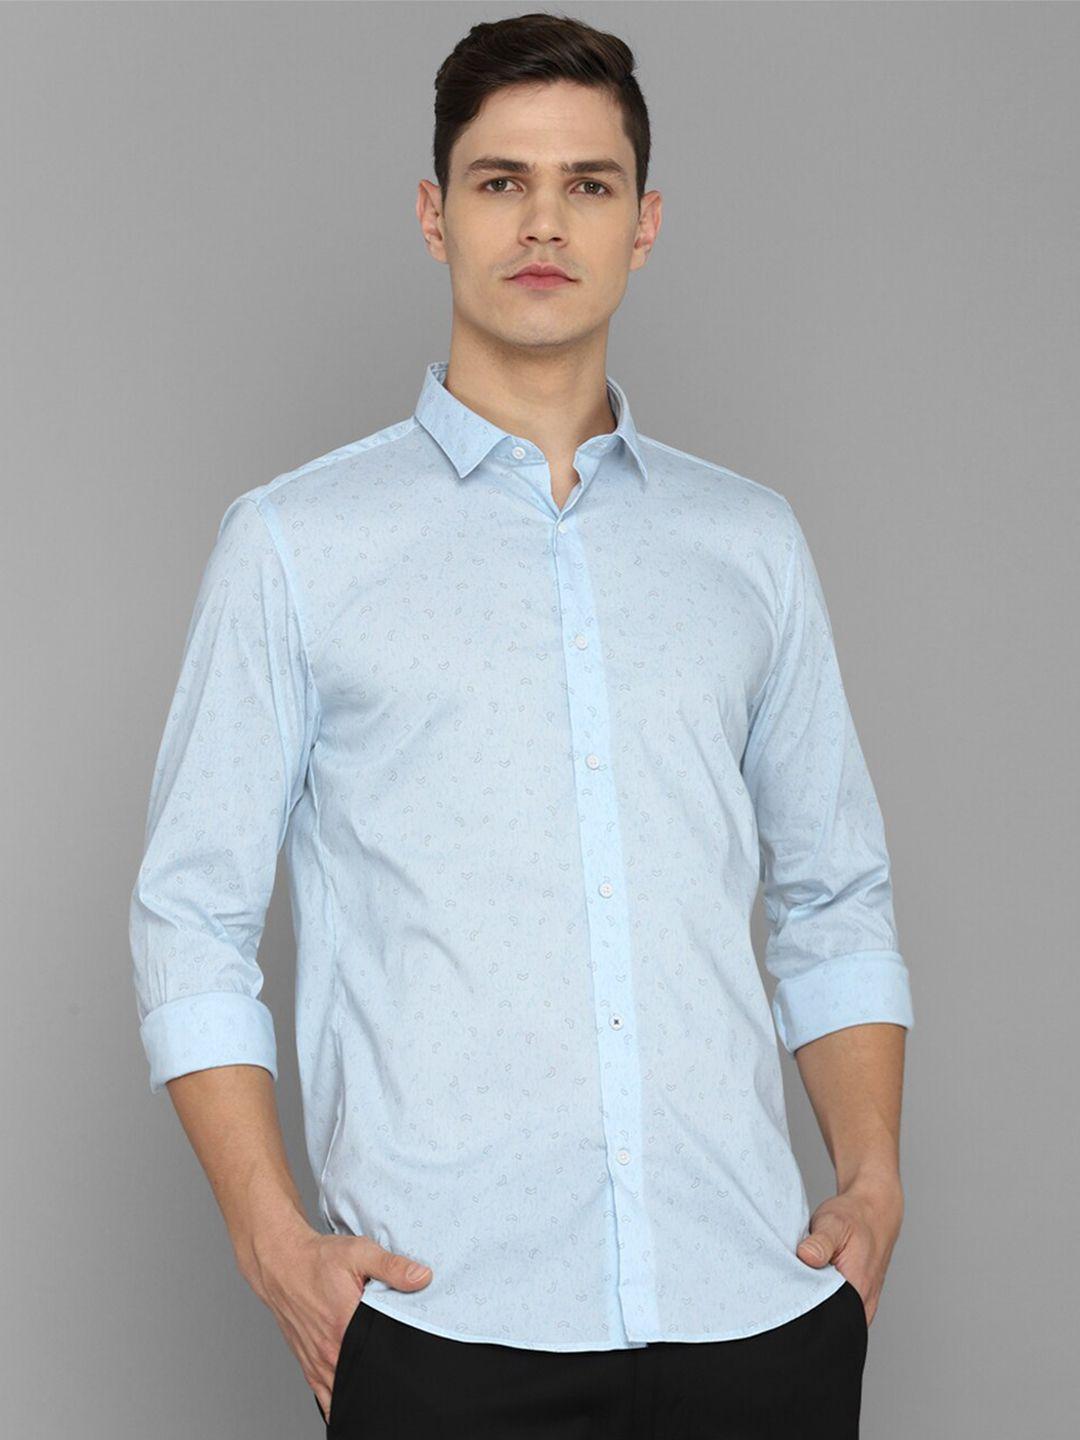 louis philippe sport men blue slim fit printed casual shirt